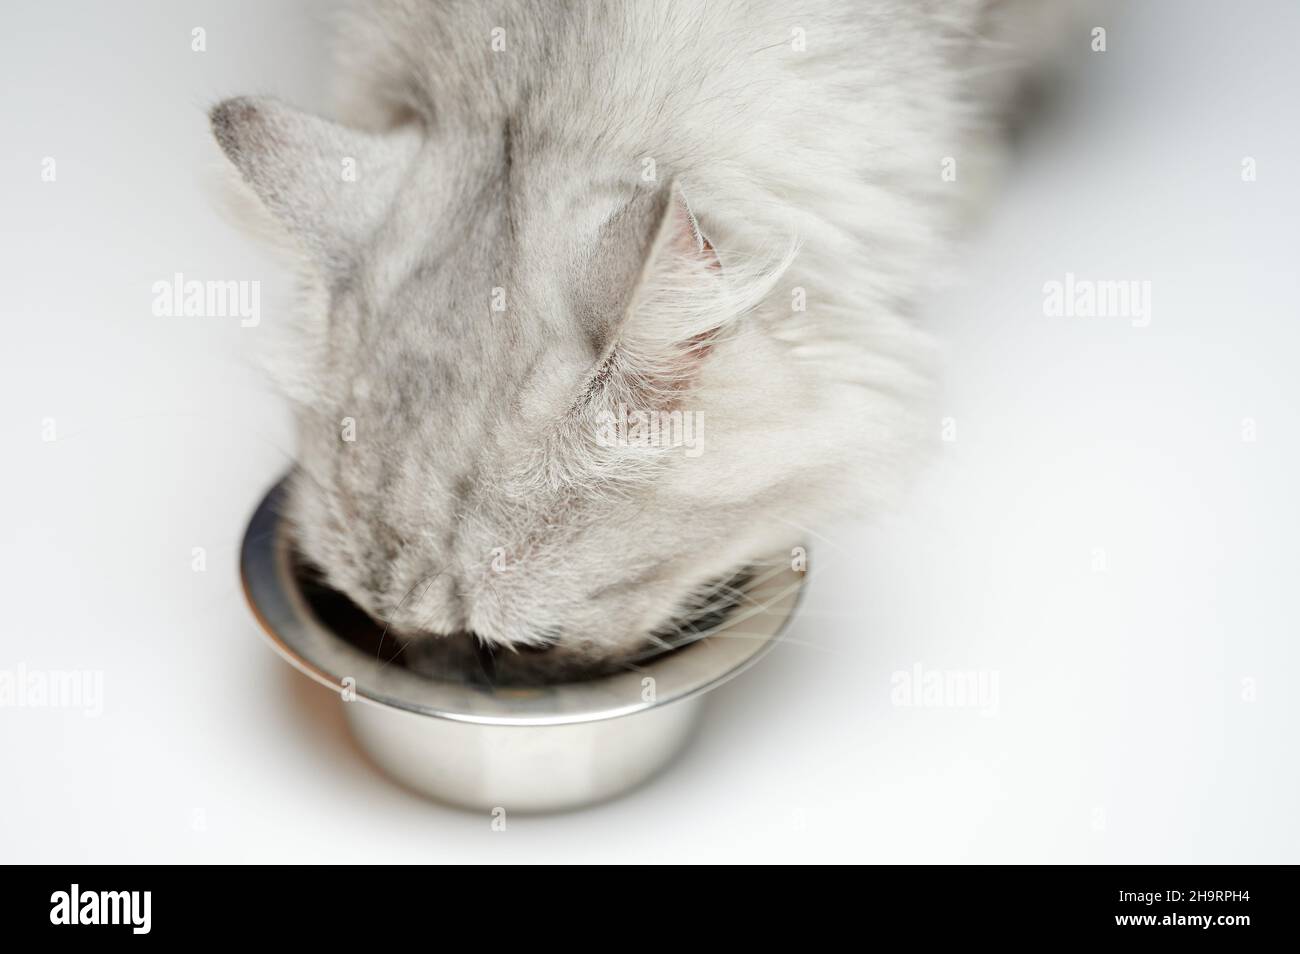 Liebenswert Kitty essen aus Metall Schüssel Nahaufnahme Ansicht isoliert Stockfoto